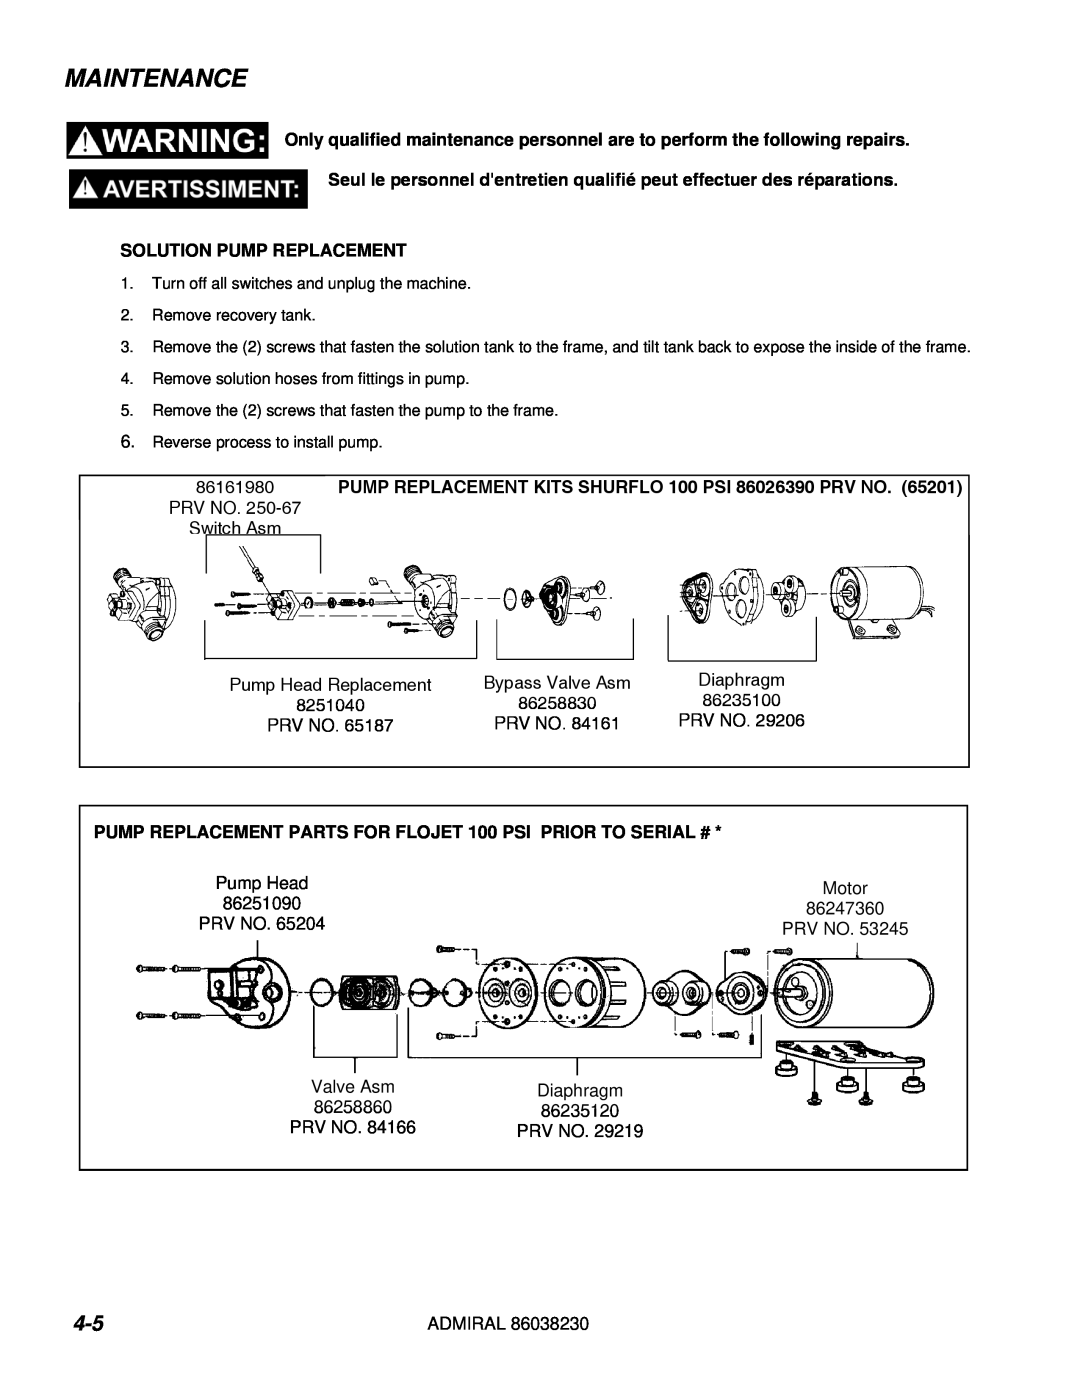 Windsor ADM8 10080170 manual Maintenance, Solution Pump Replacement 